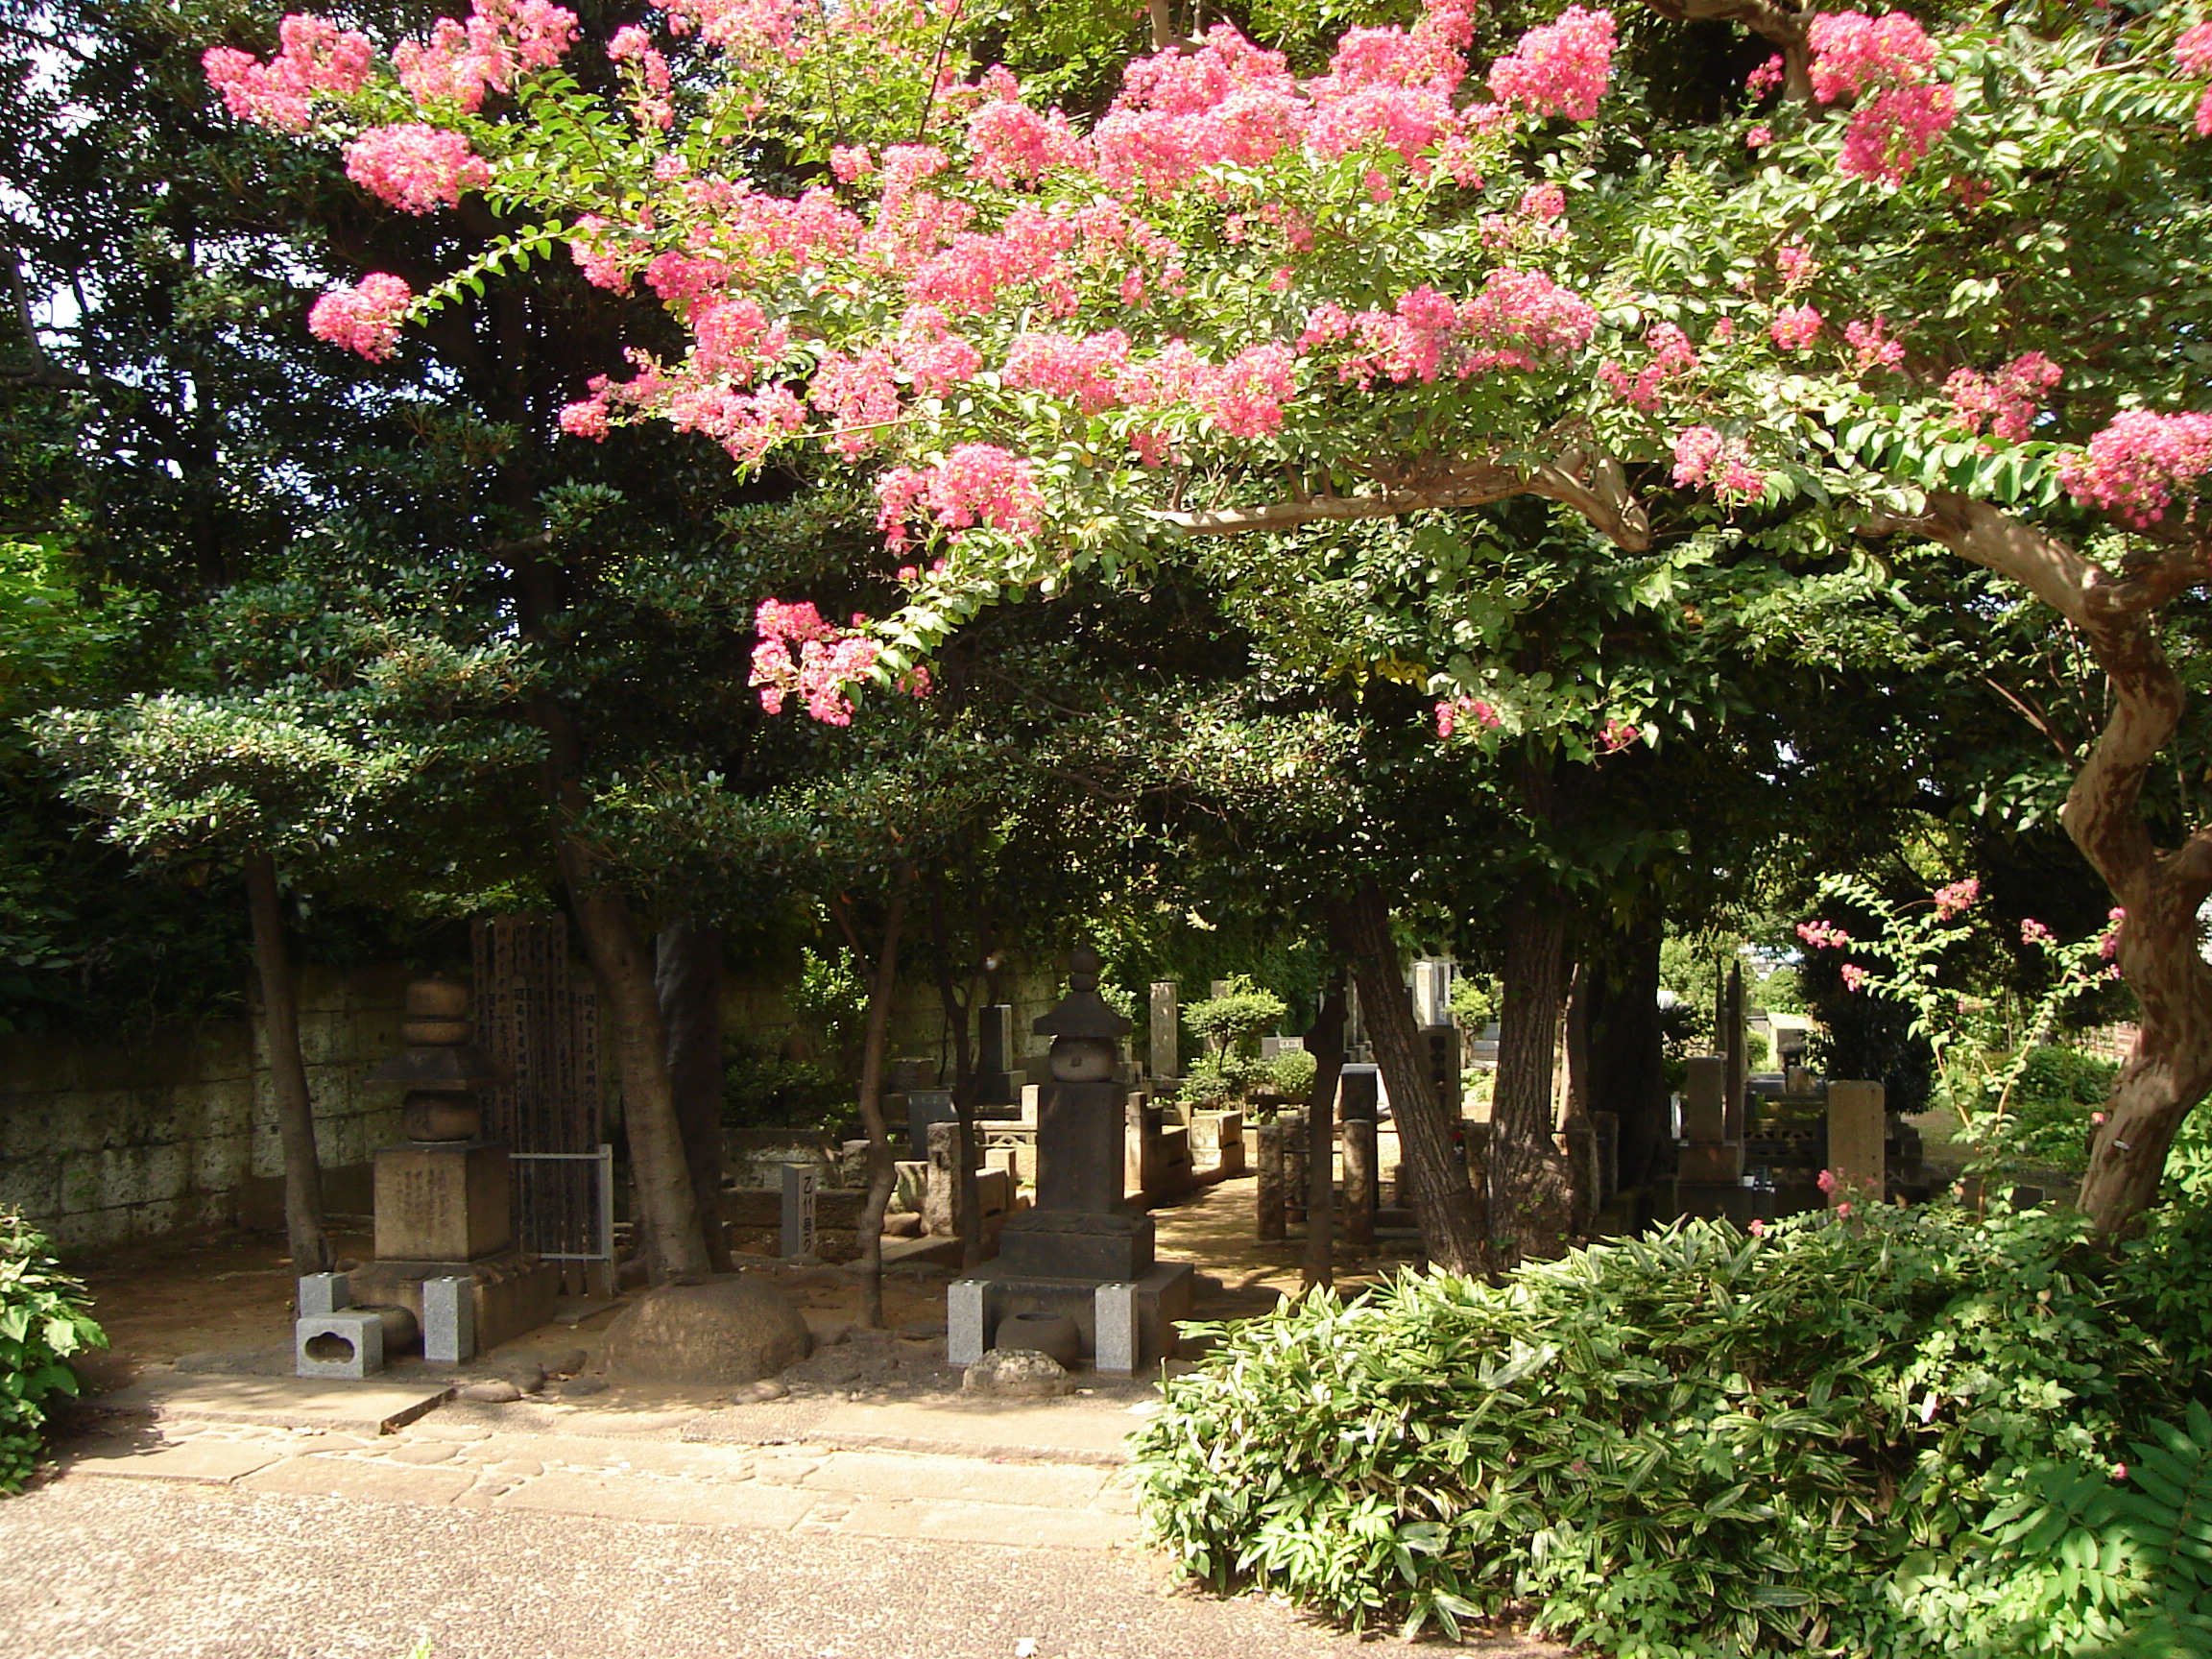 small gravestones among flowering trees